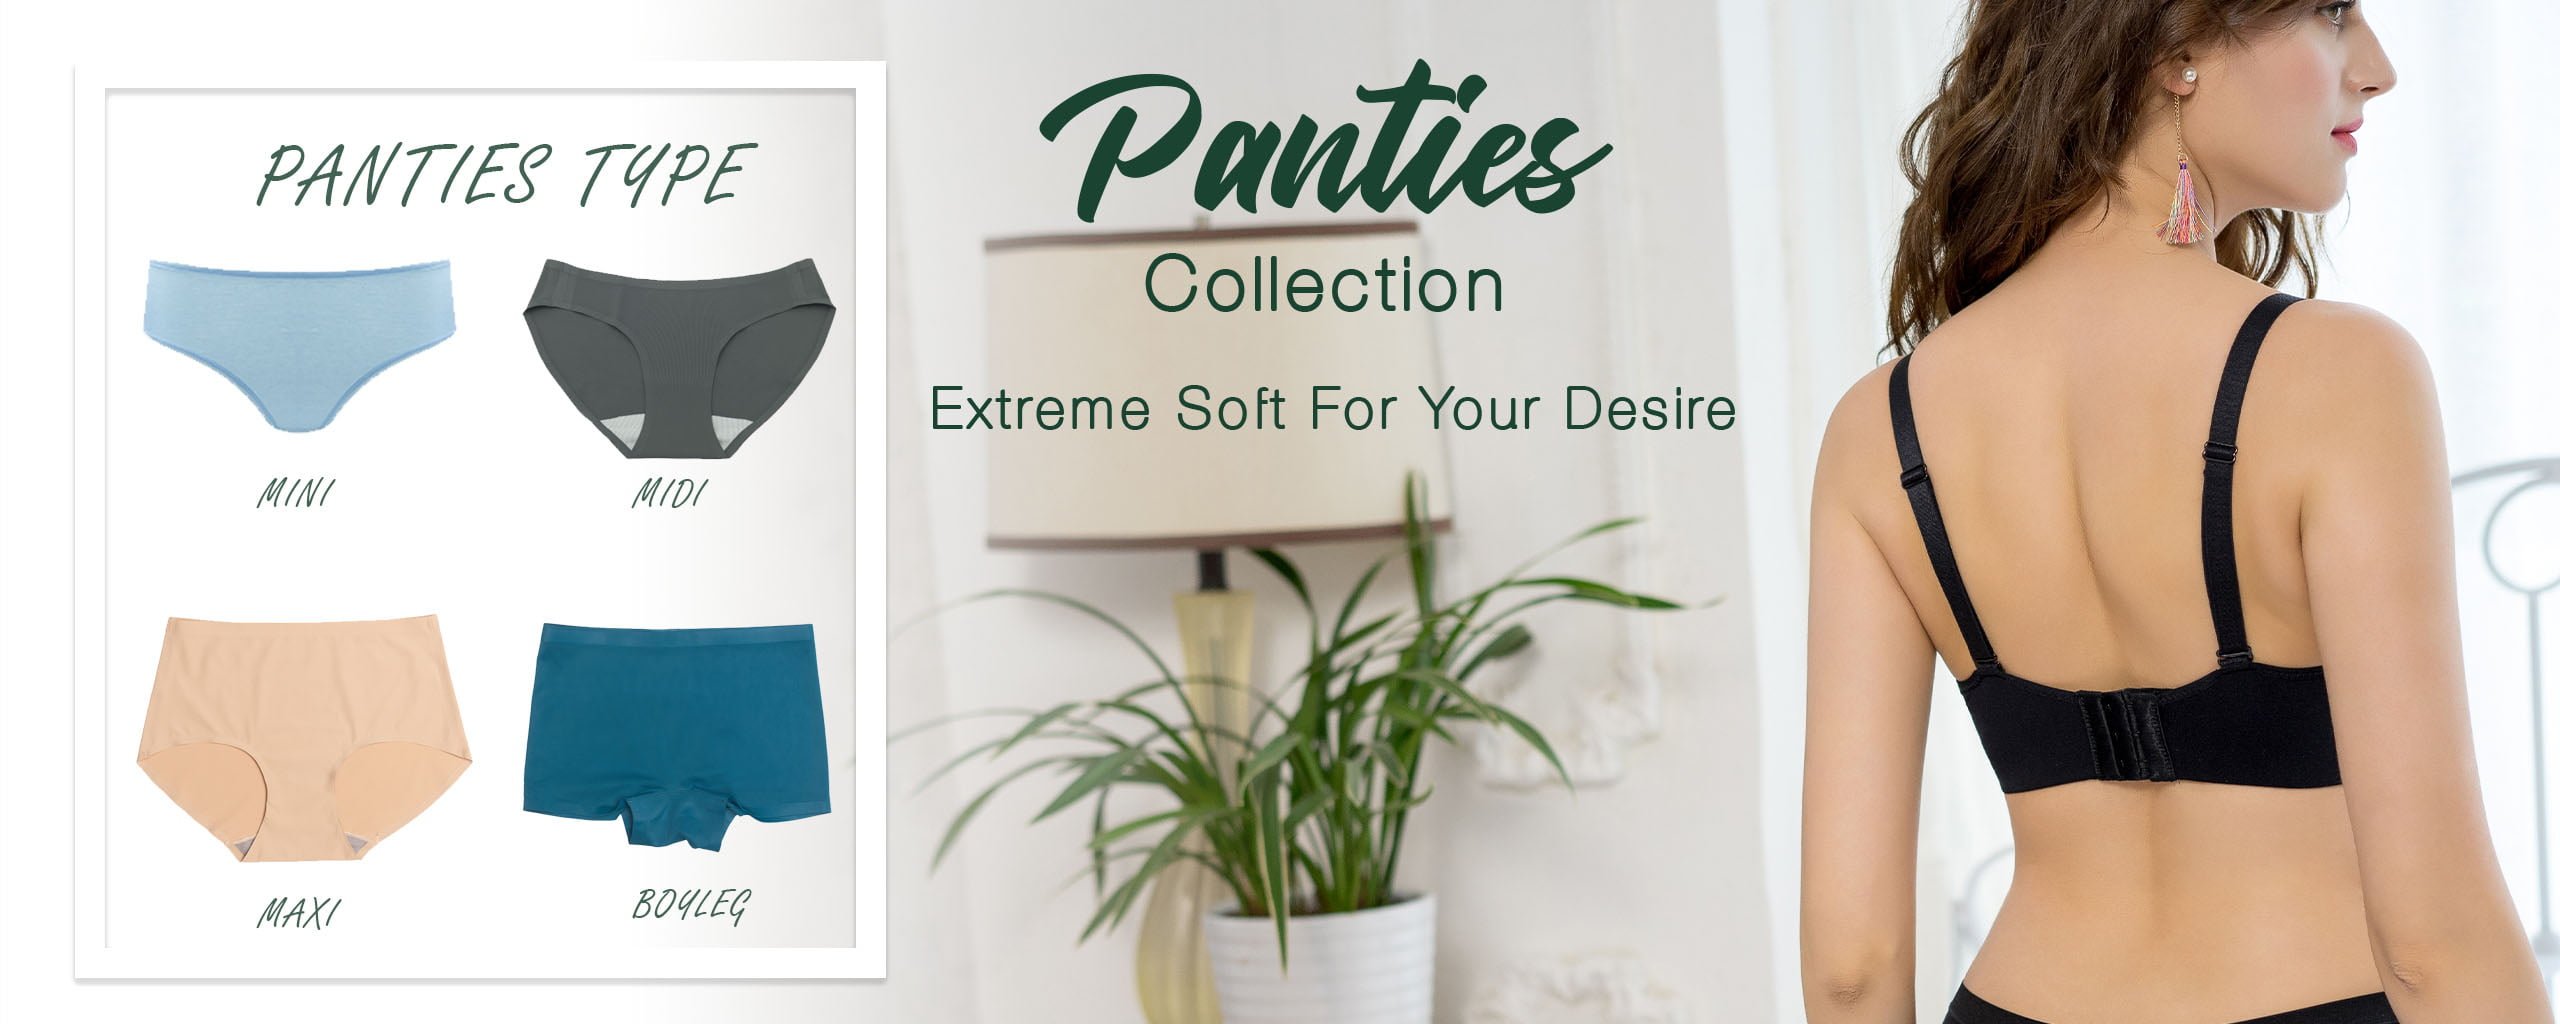 Panties Collection